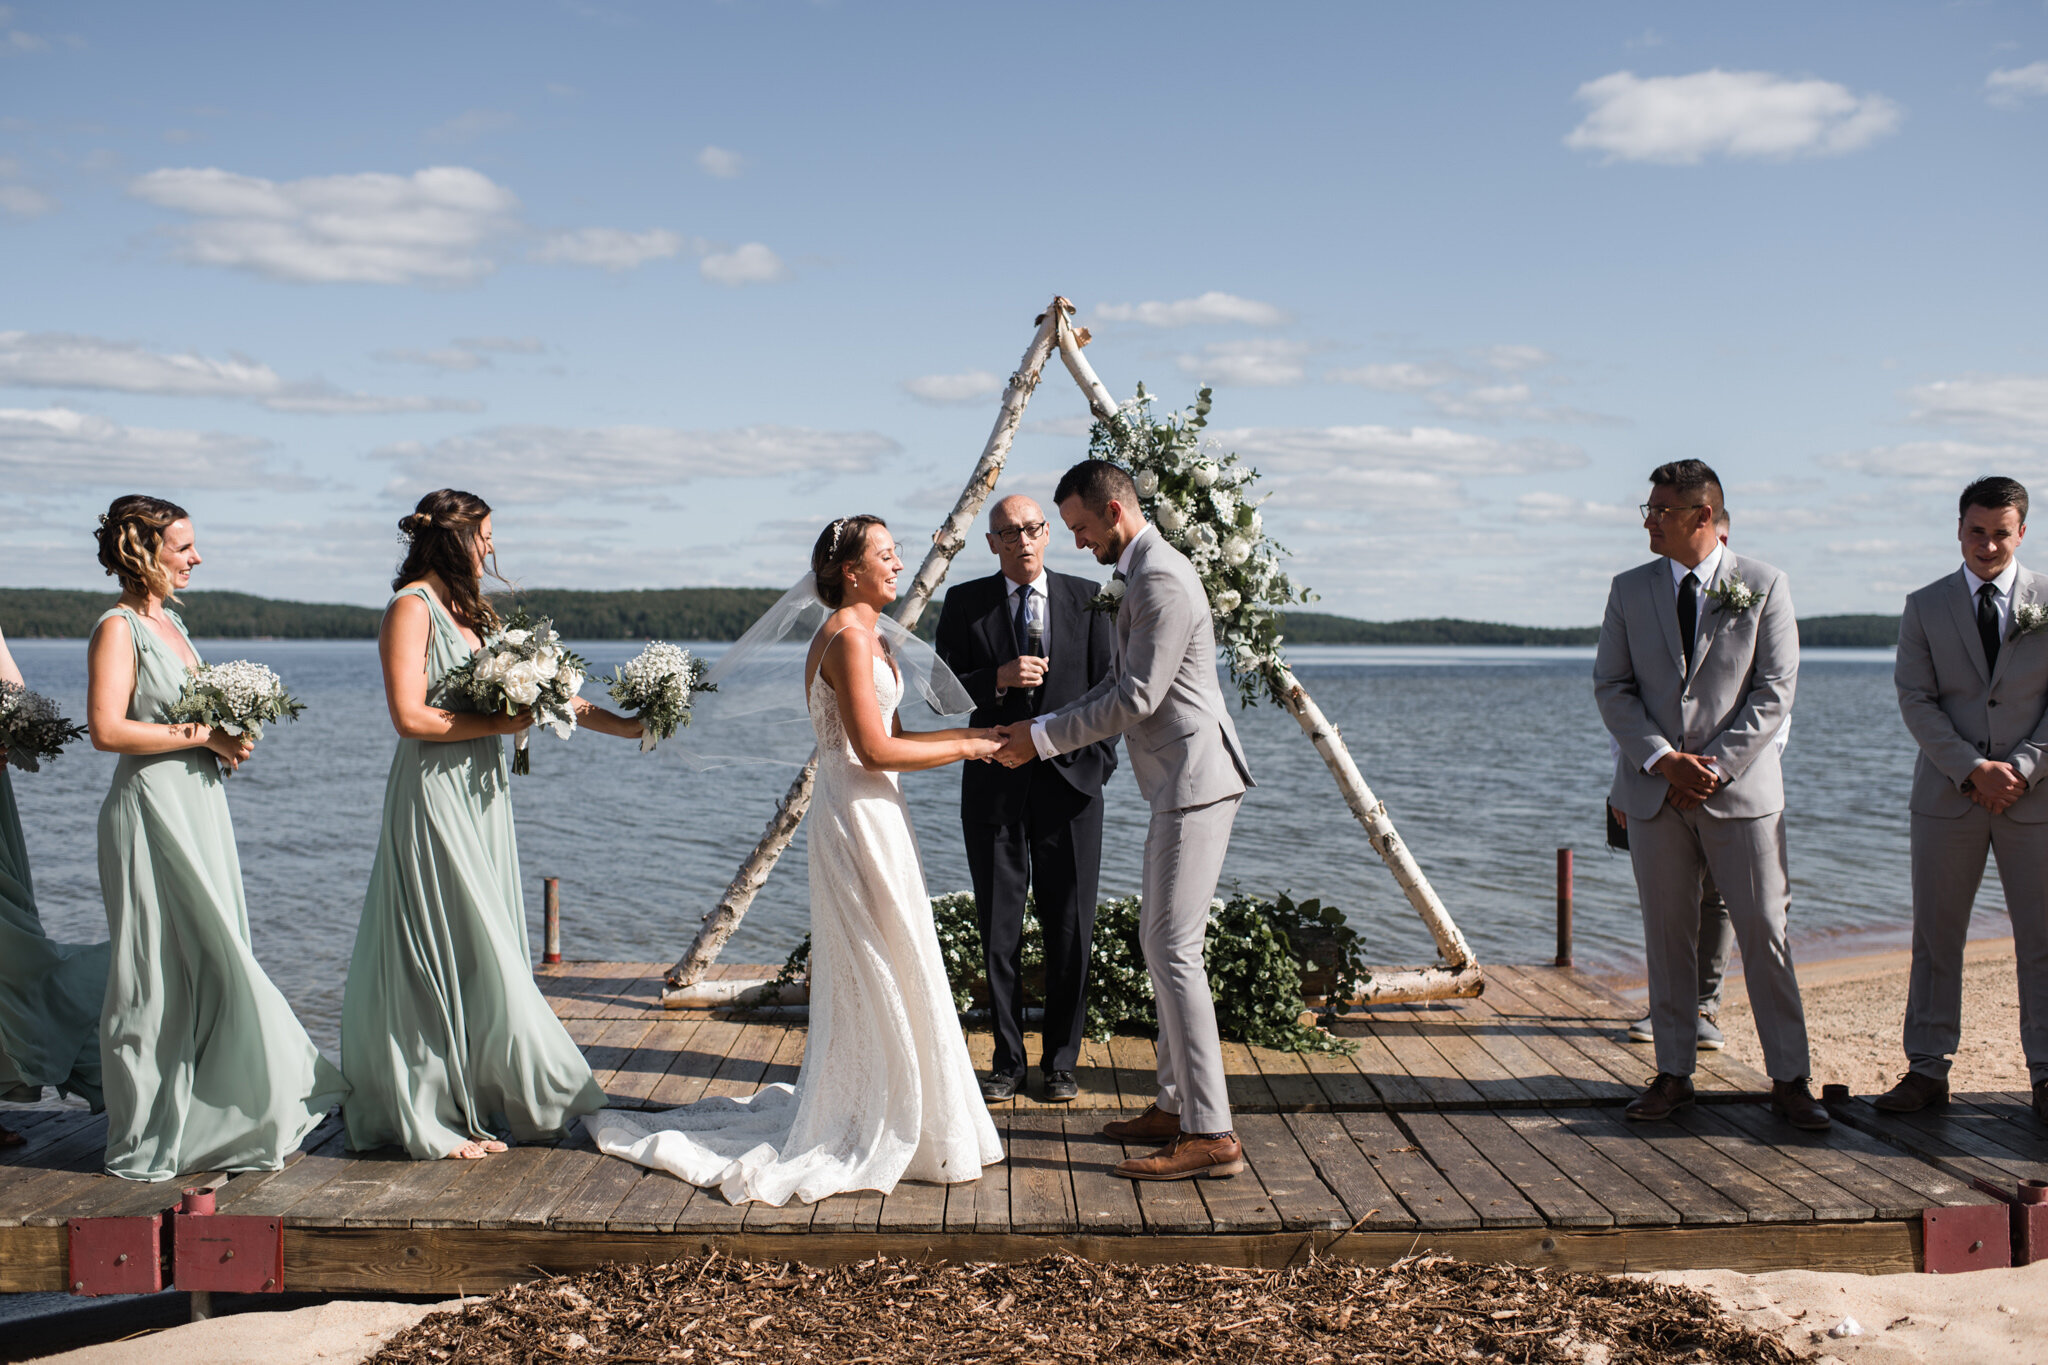 602-outdoor-wedding-ceremony-by-the-lake-sundridge.jpg